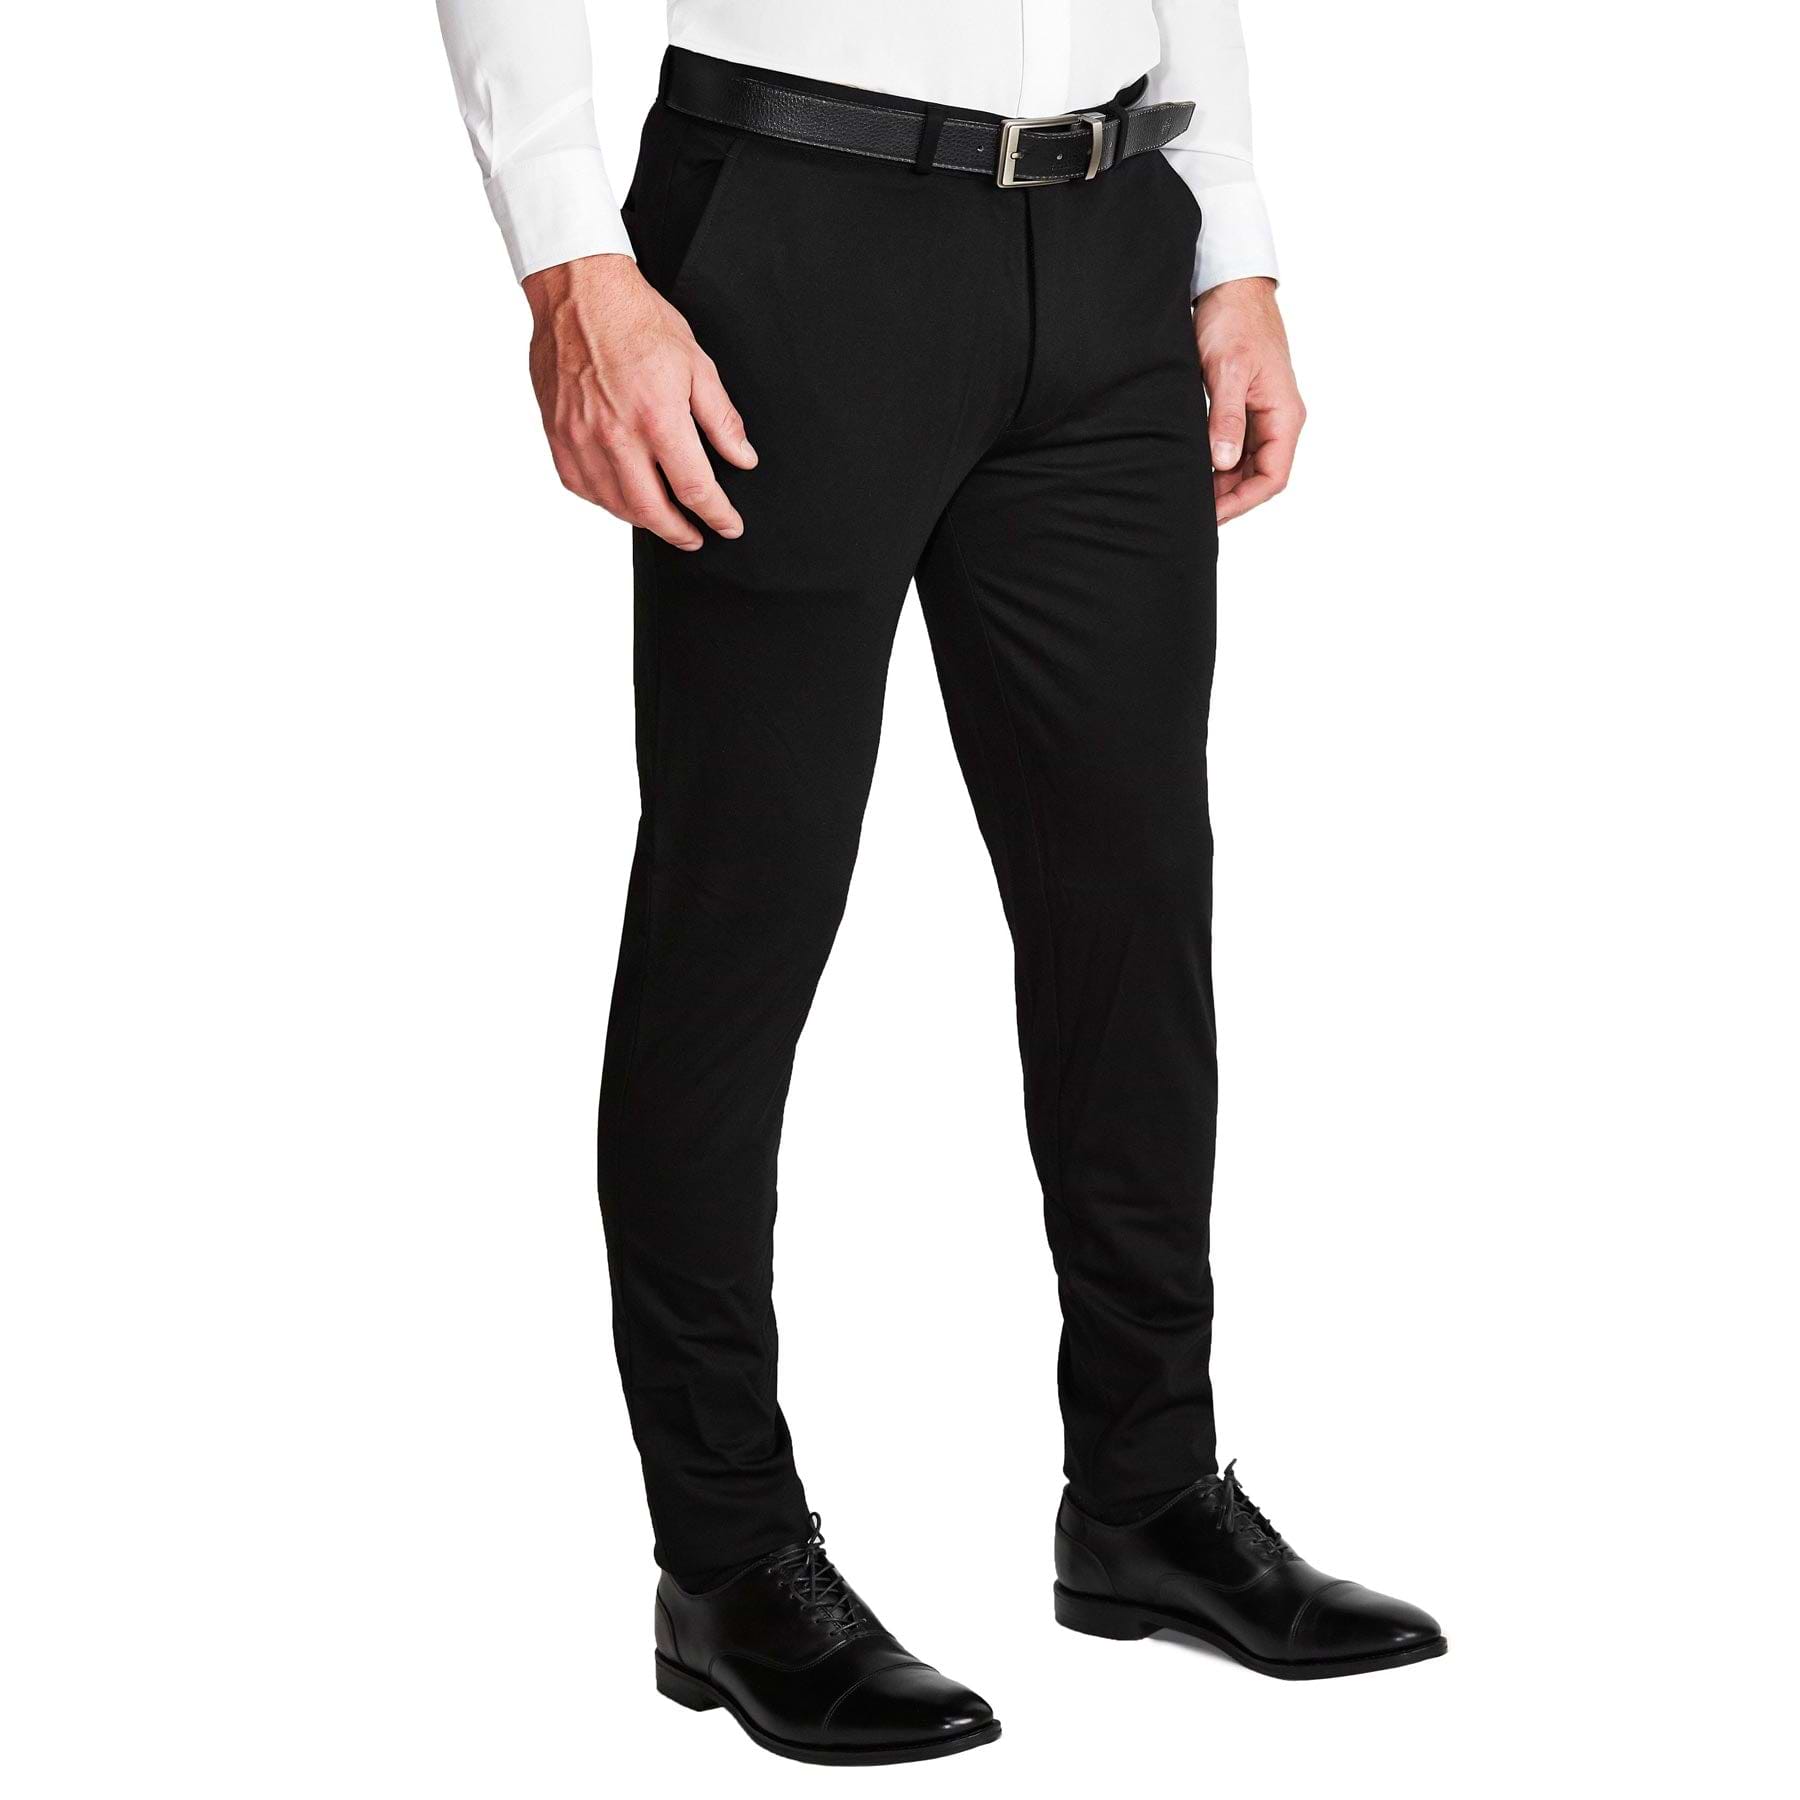 Men's Stretchy Slim Fit Straight Pants | Mens pants fashion, Slim fit  formal pants, Mens pants casual